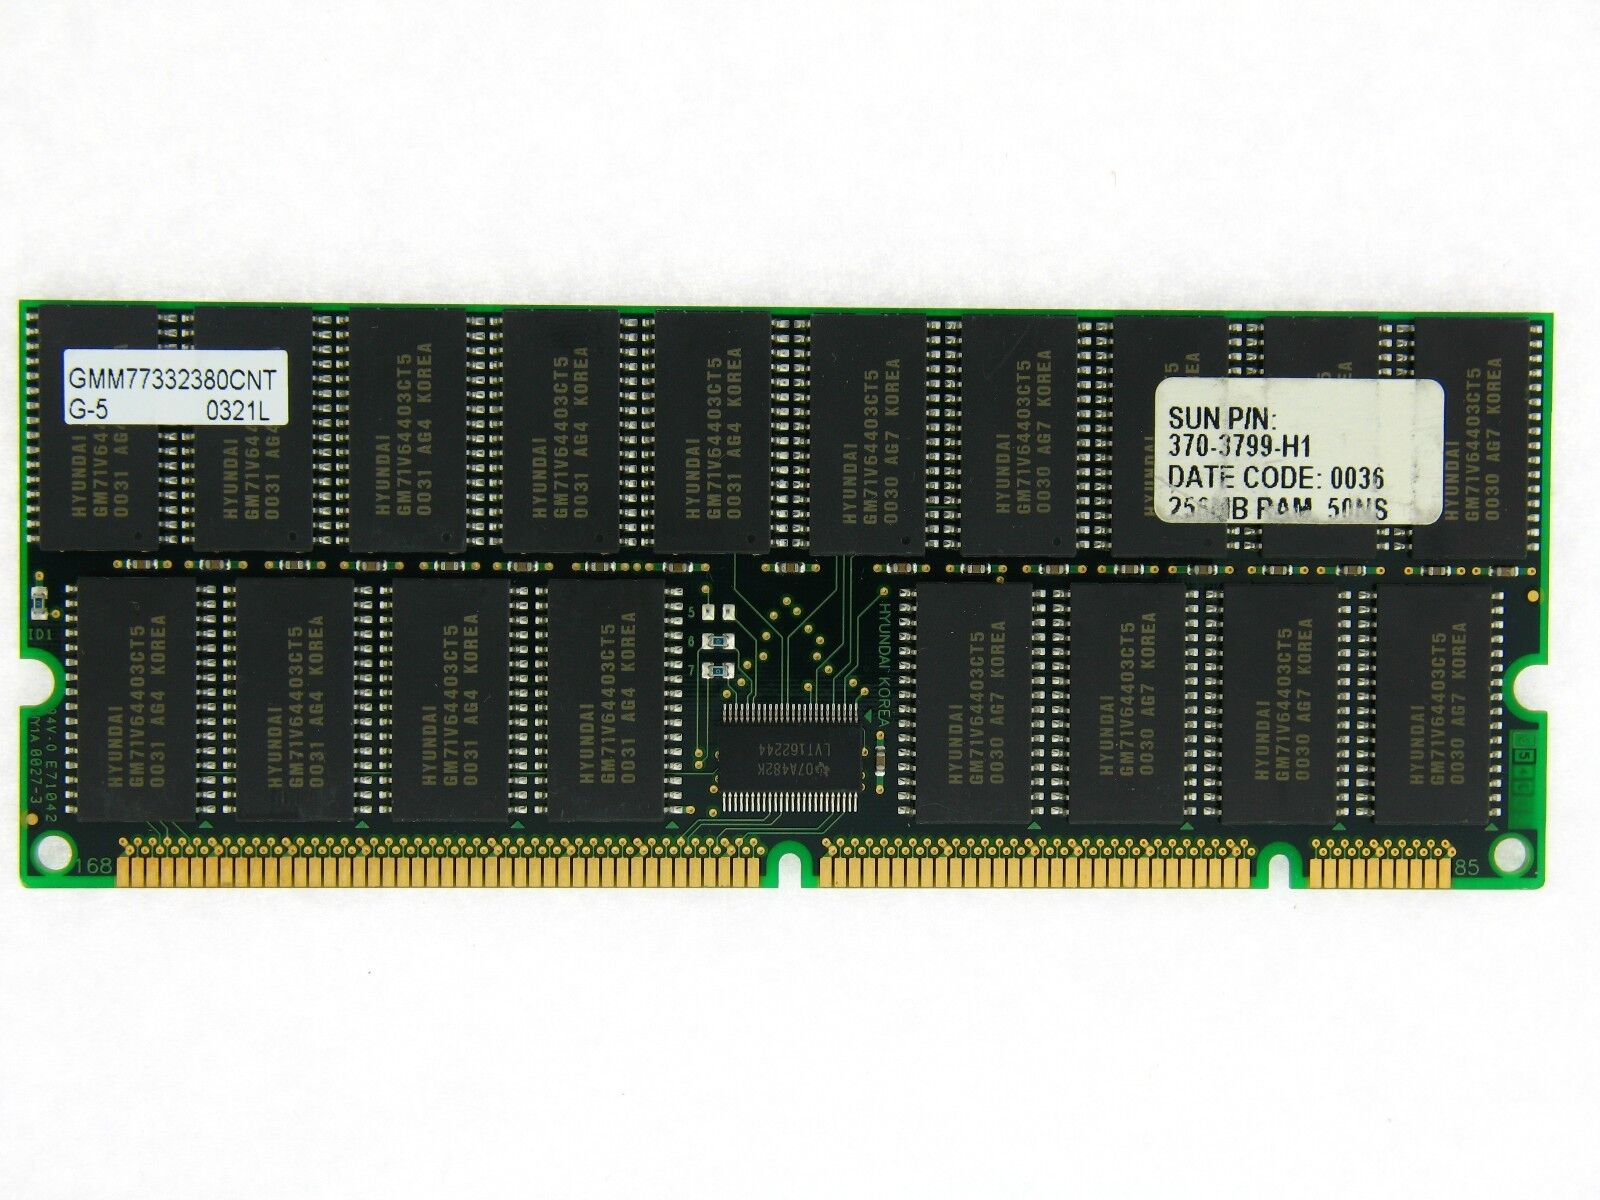 Sun Memory 370-3799 256MB Memory module (Half Kit X7039A) Ultra 10 Ultra5 TESTED